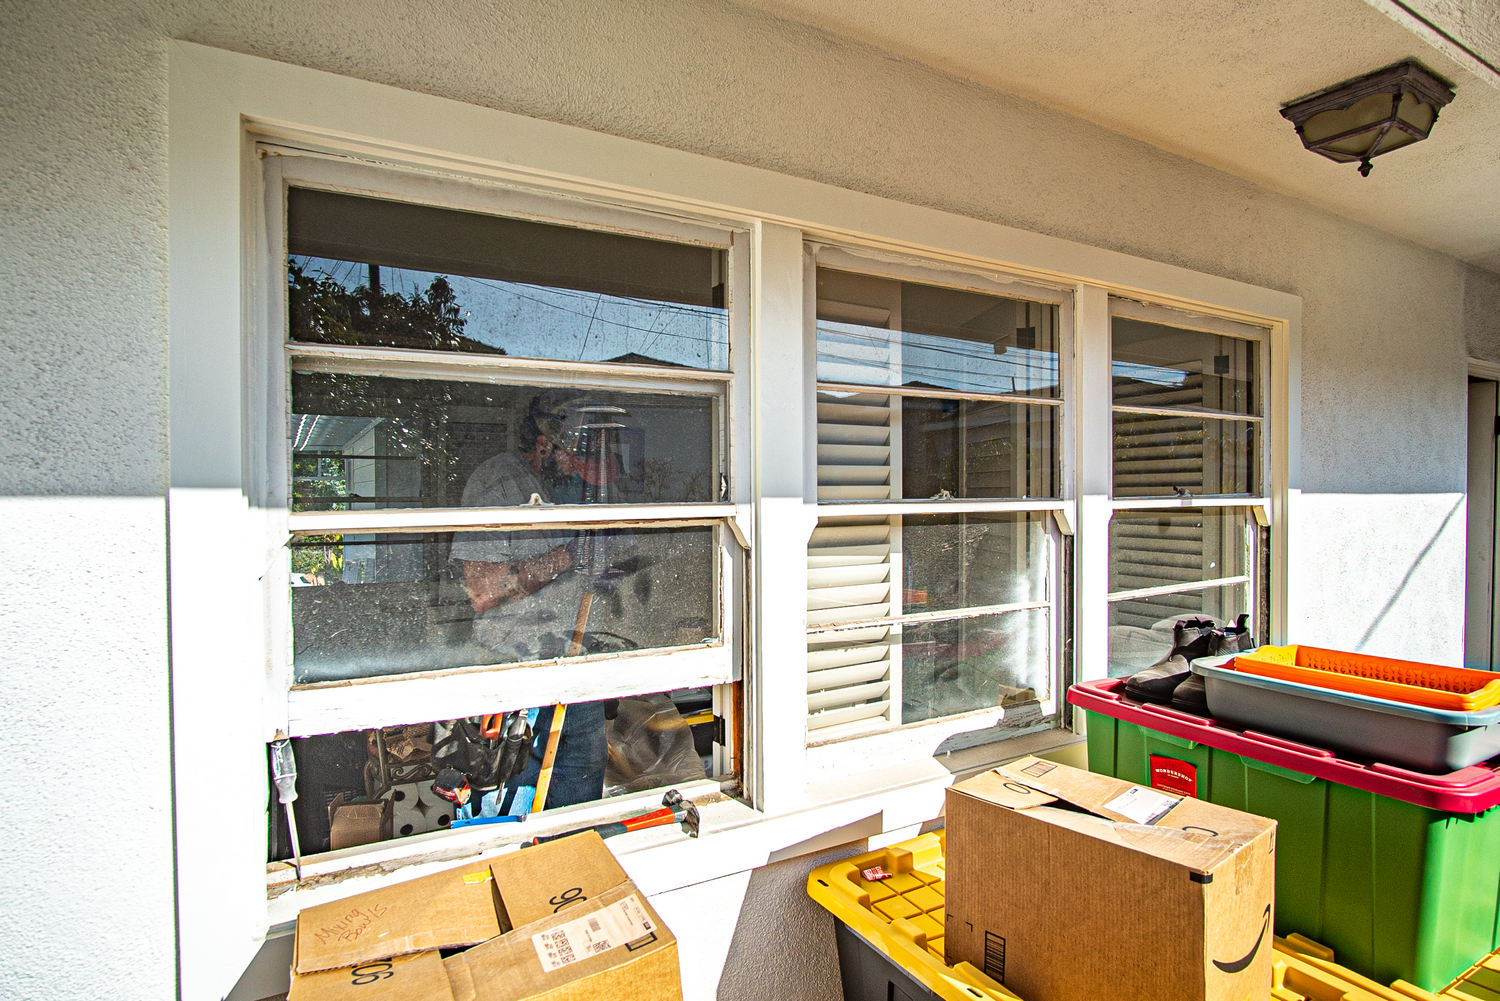 Window Replacement in San Pedro, CA